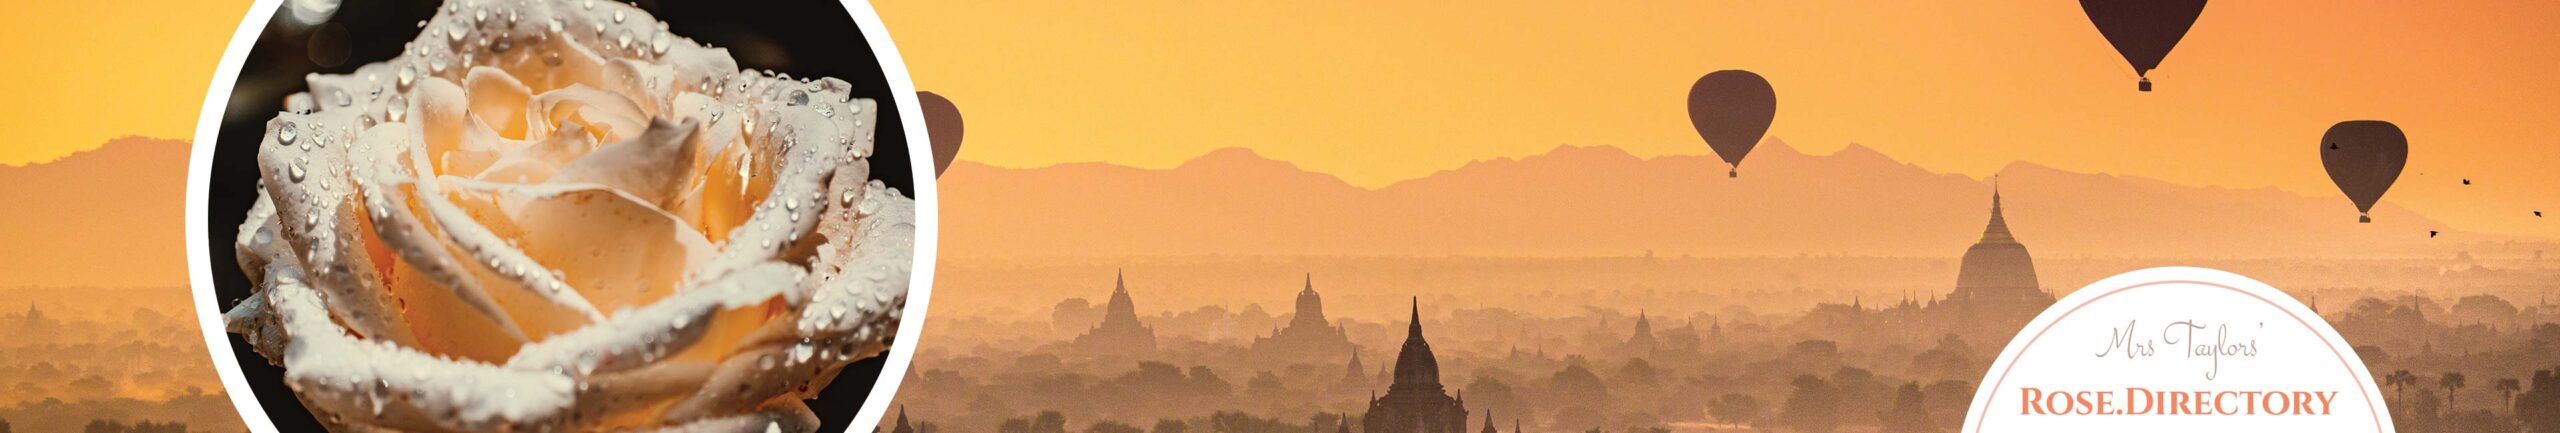 Orange sunrise across Myanmar with orange peach blush rose